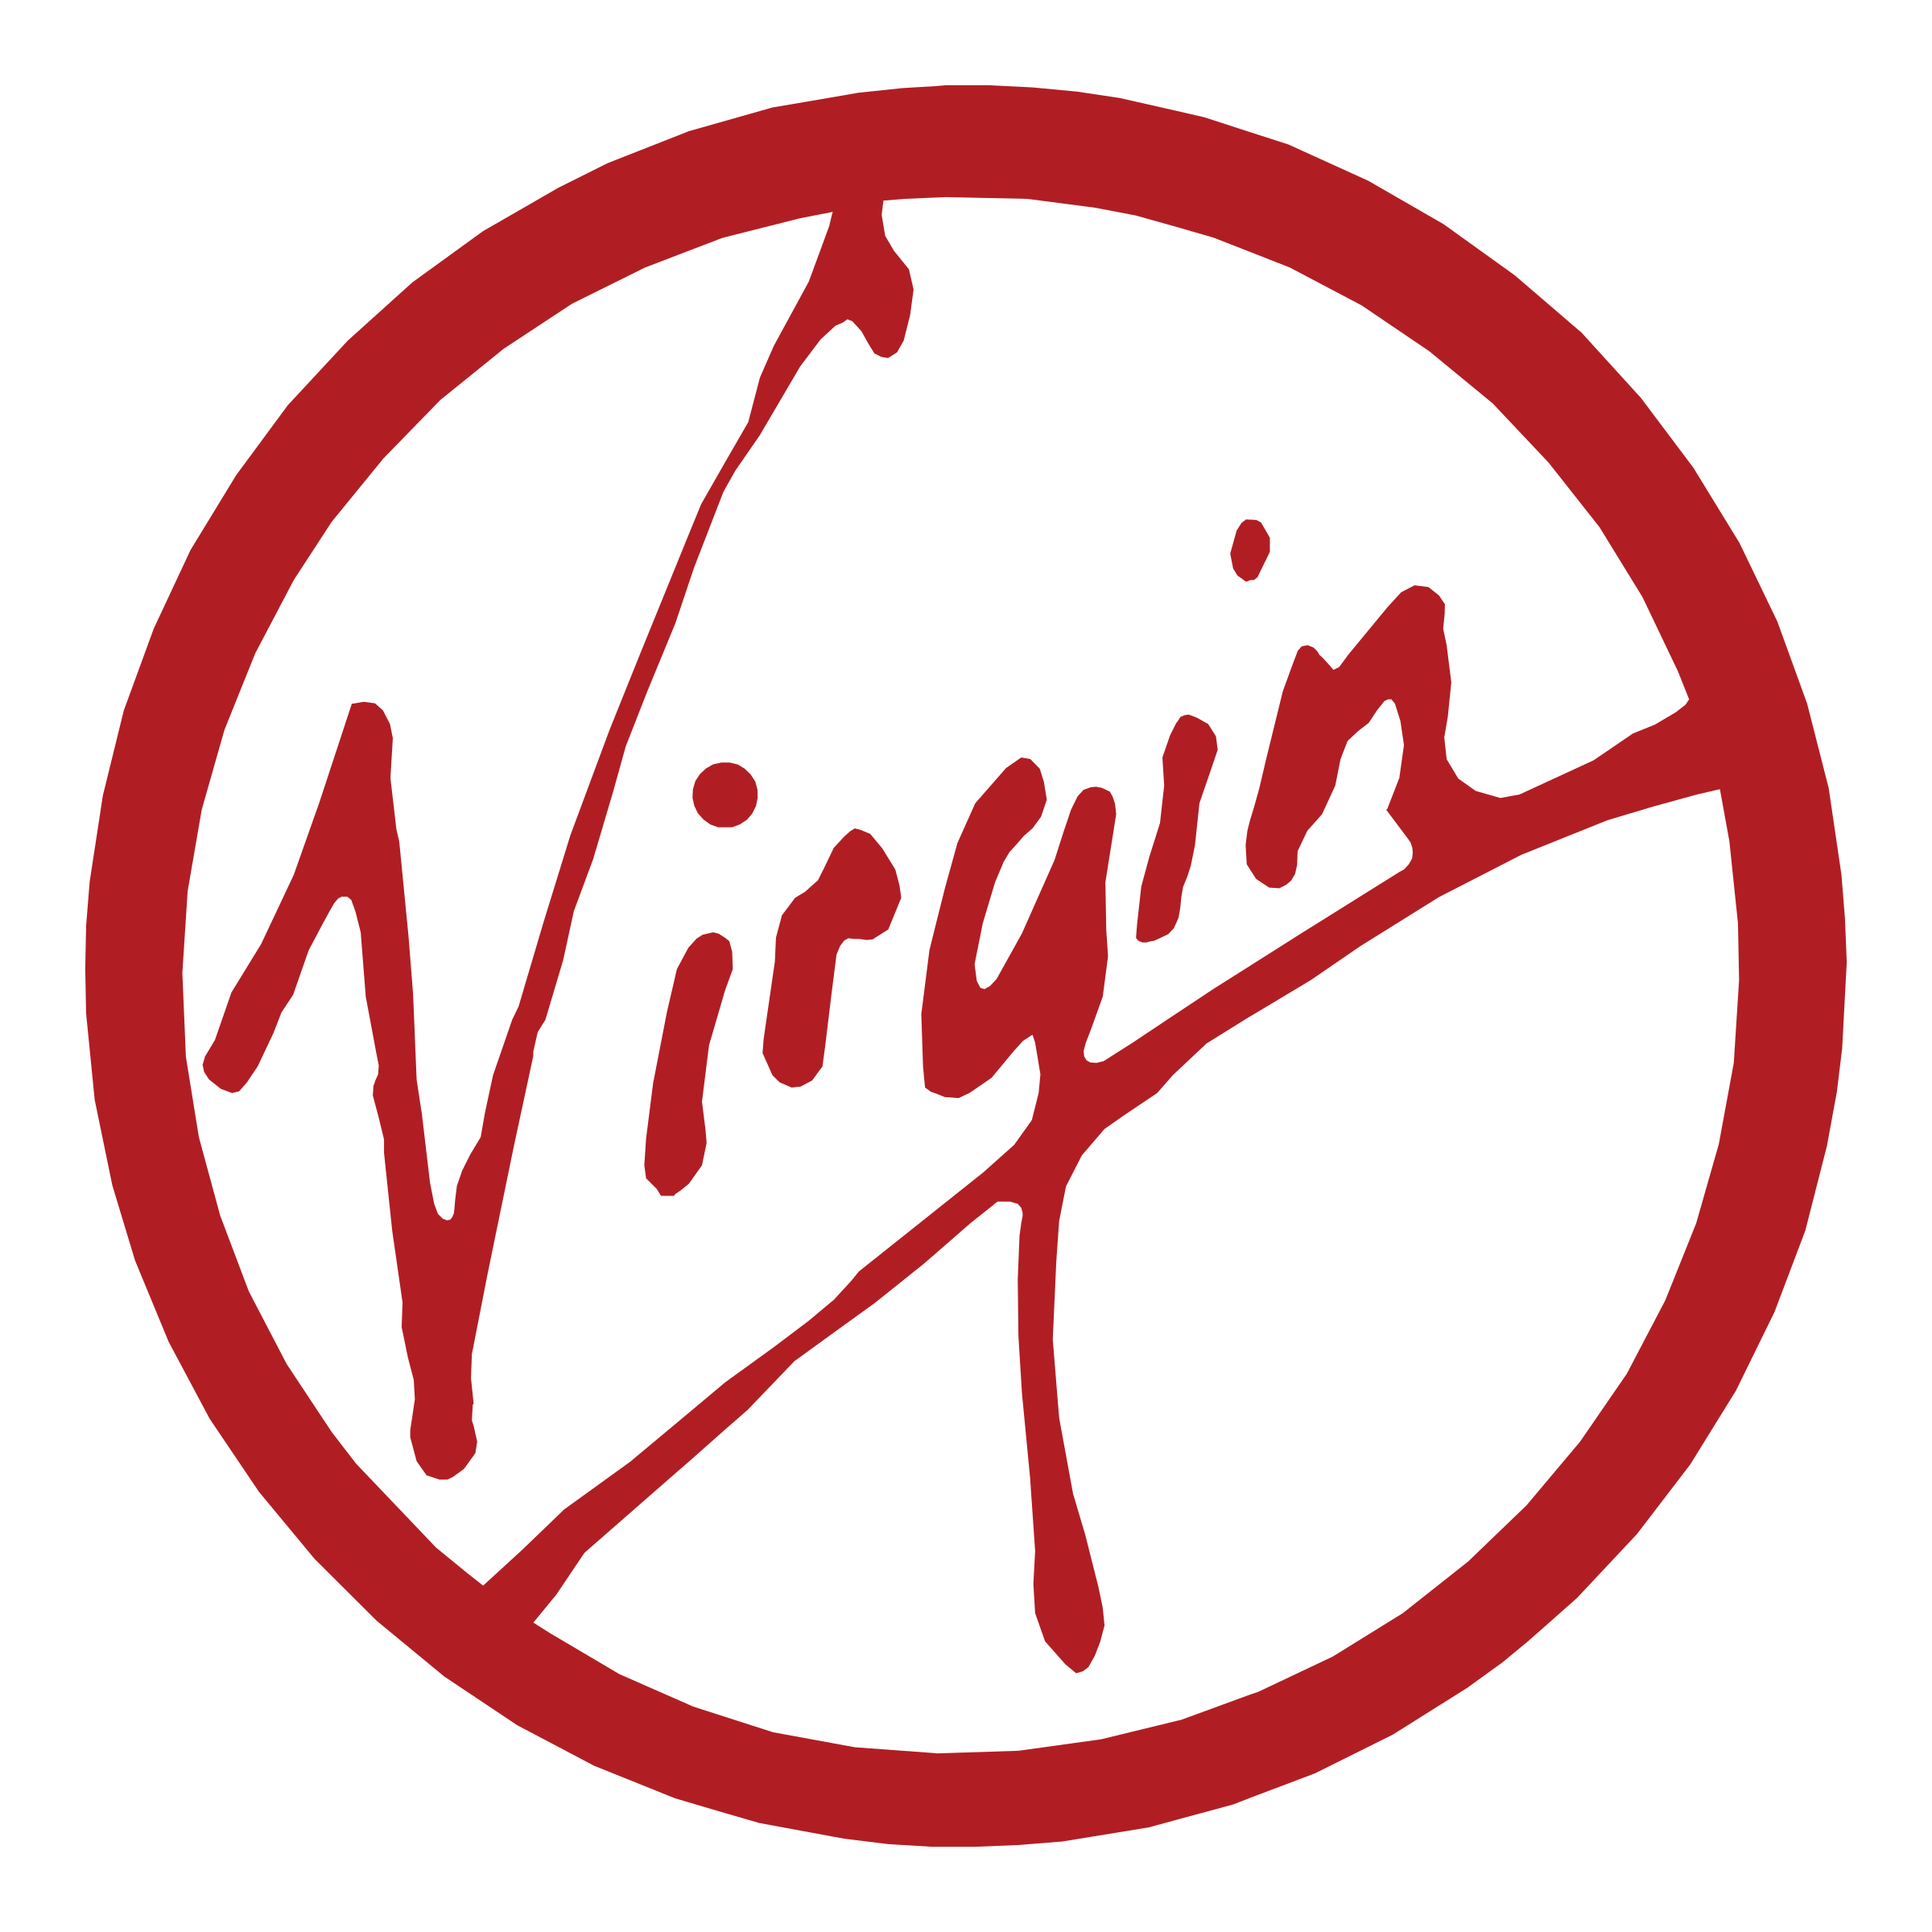 Virgin Logo - Virgin Logo PNG Transparent & SVG Vector